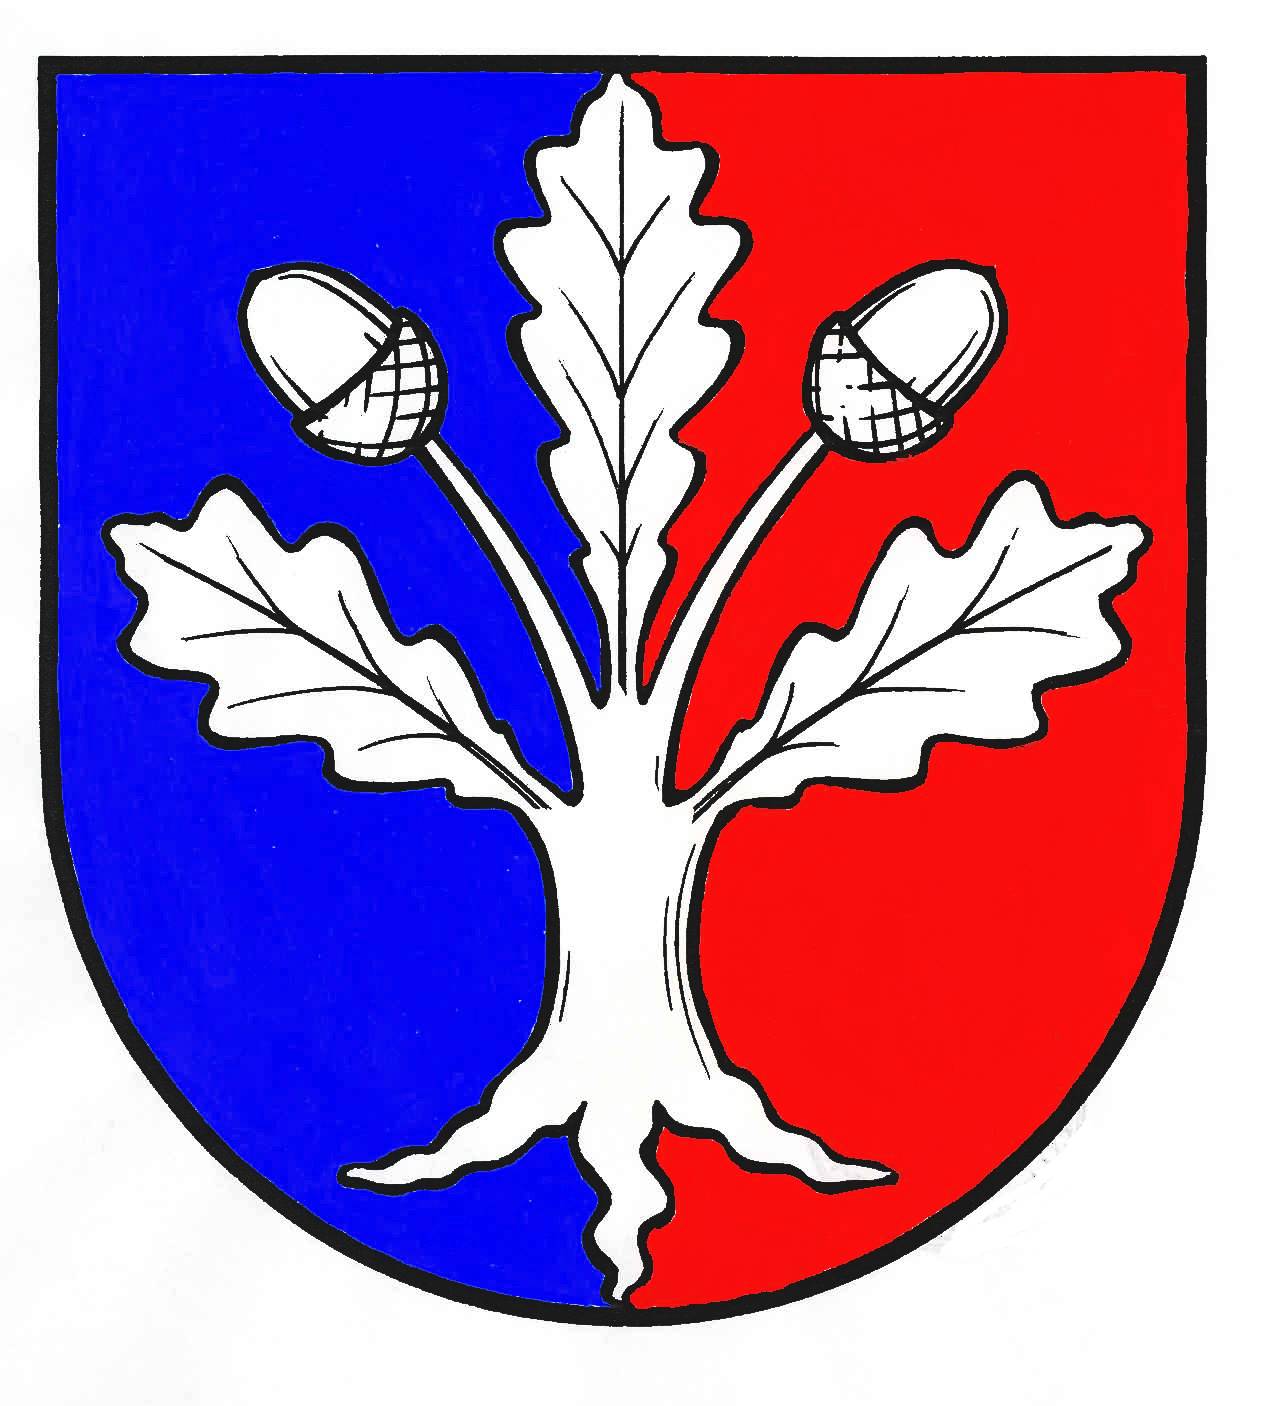 Wappen Gemeinde Seeth-Ekholt, Kreis Pinneberg